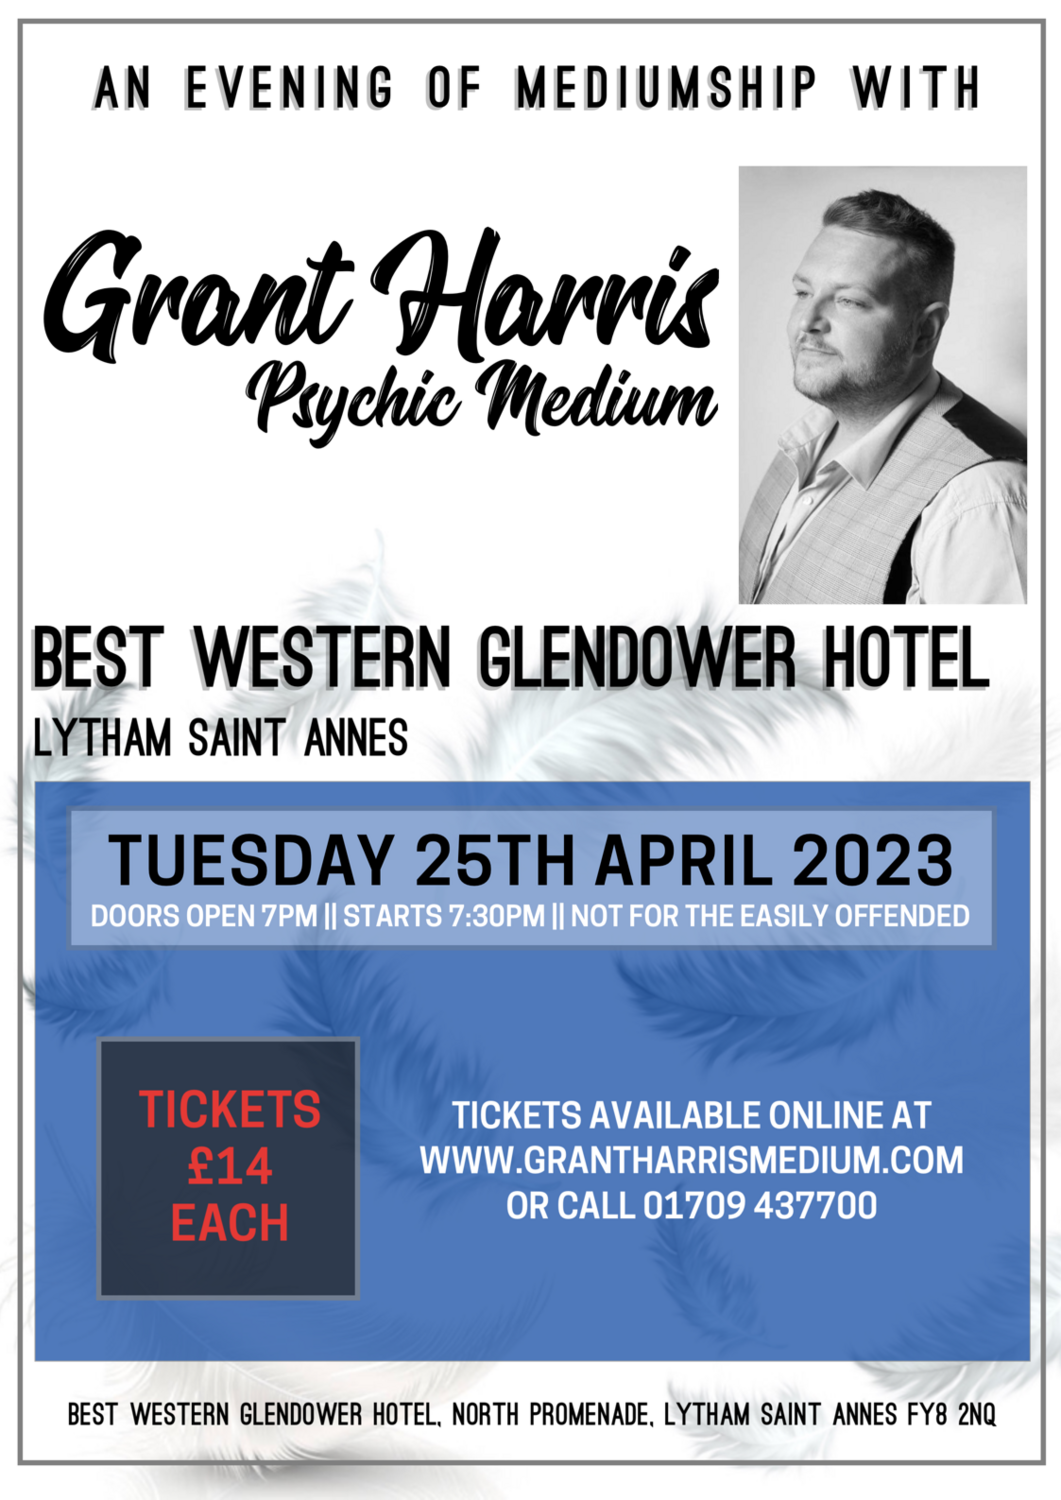 Glendower Hotel, Lytham St Annes, Tuesday 25th April